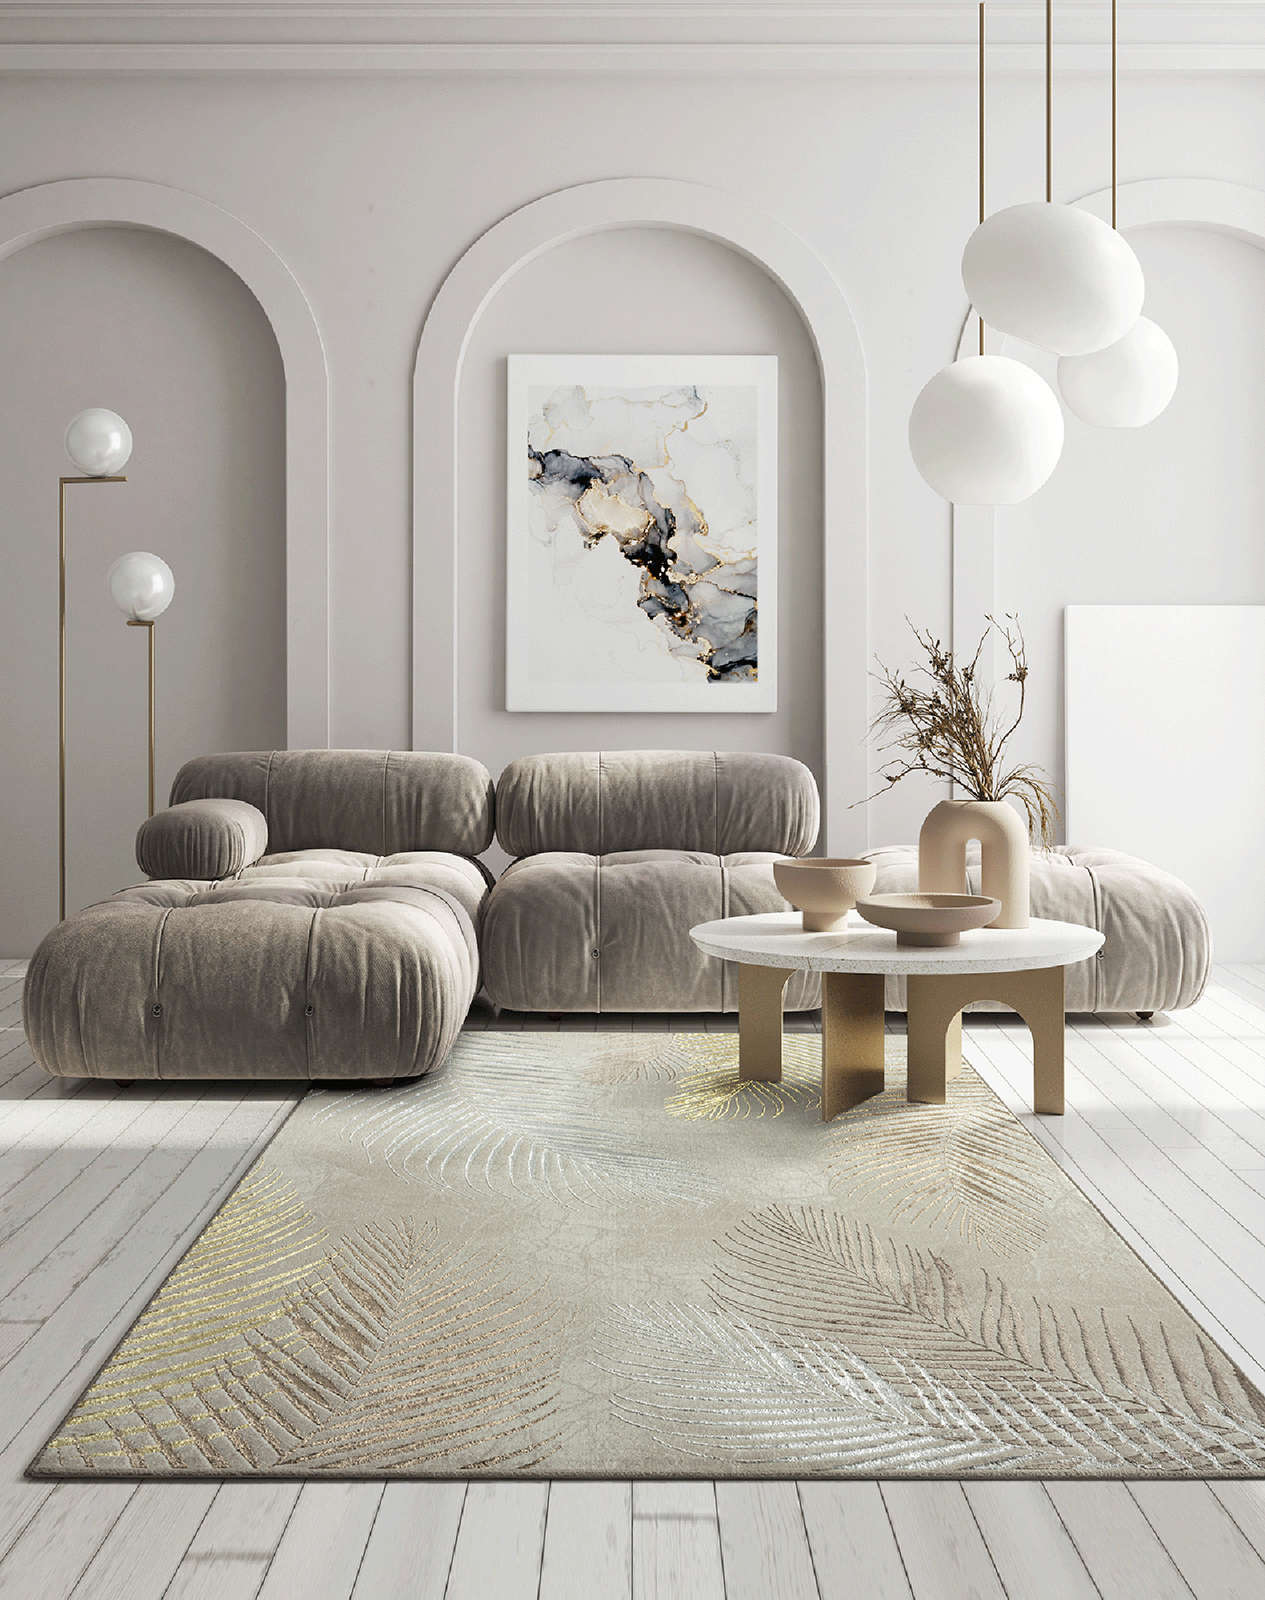             soft cream high pile carpet - 230 x 160 cm
        